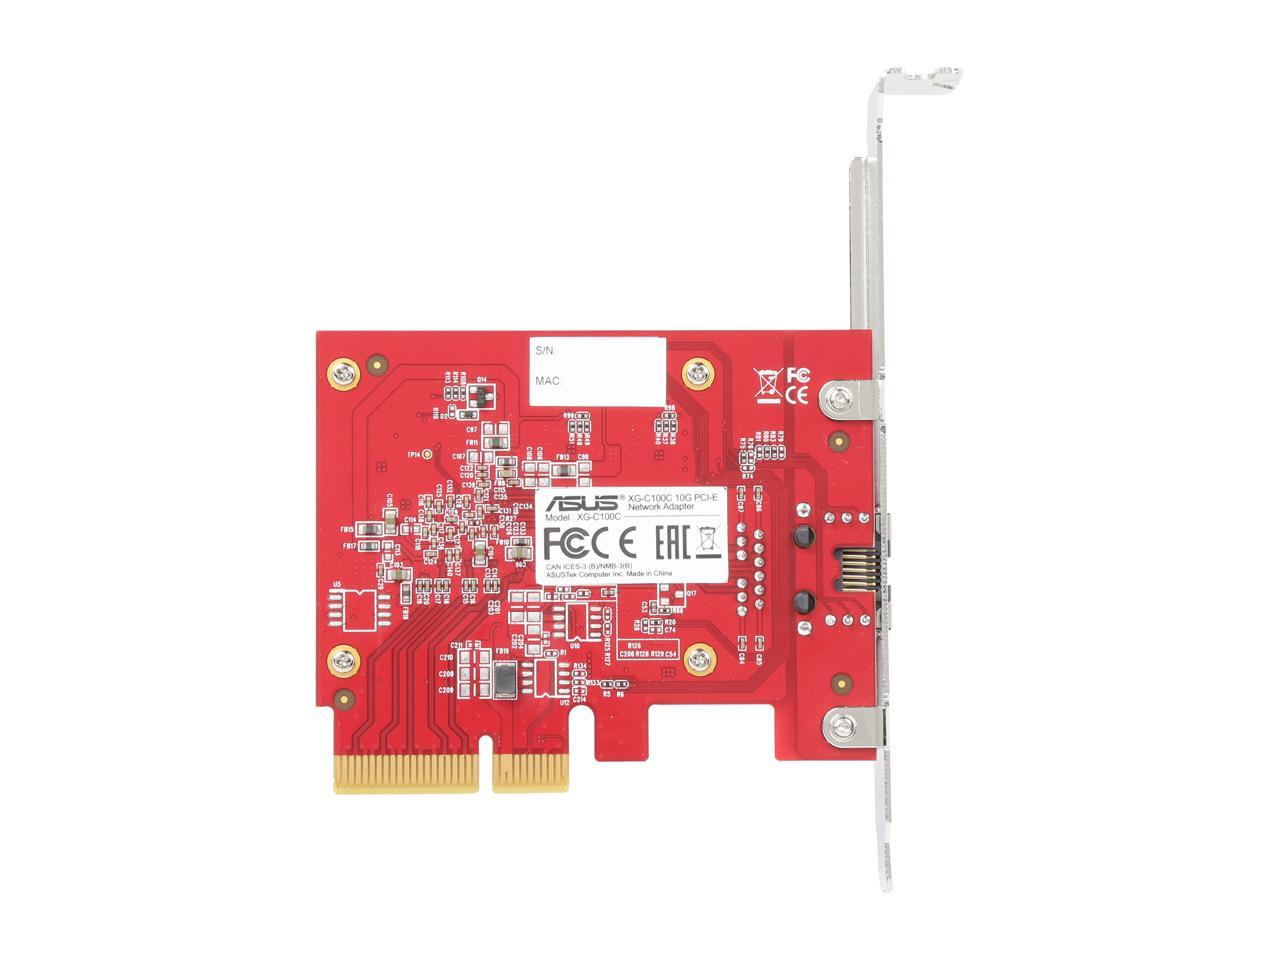 Asus Xg-C100C 10G Network Adapter Pci-Express X4 Card